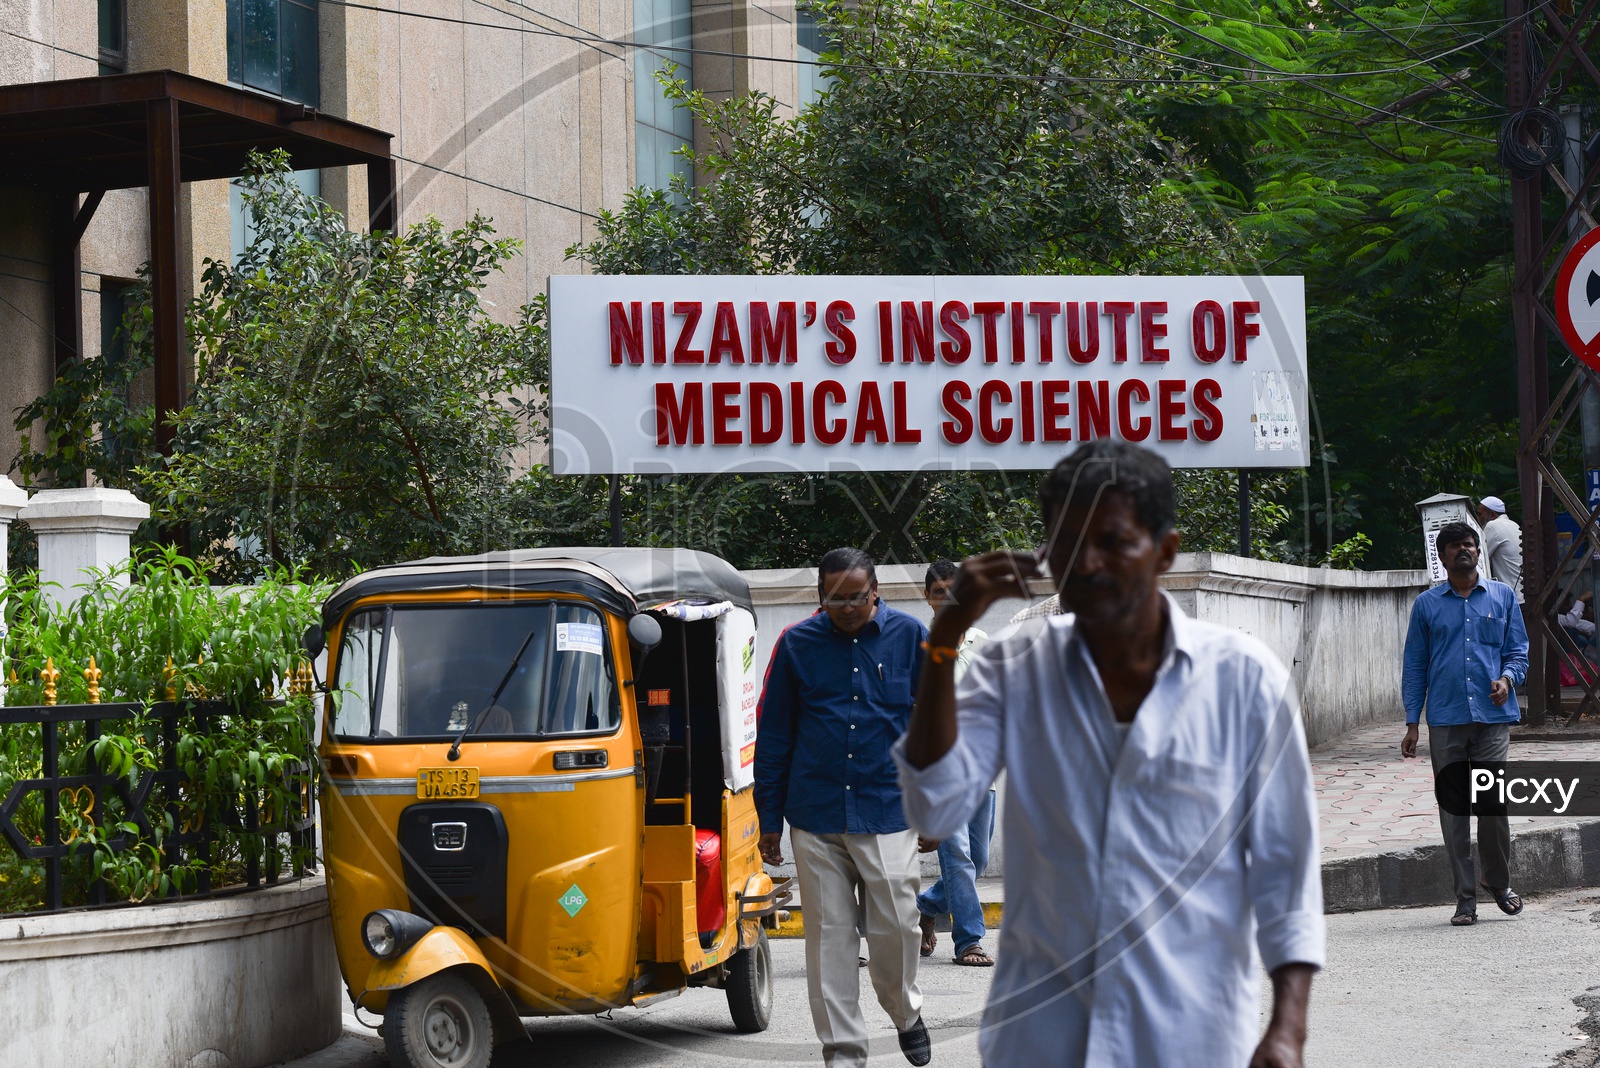 Nizams Institute Of medical Sciences  name Board